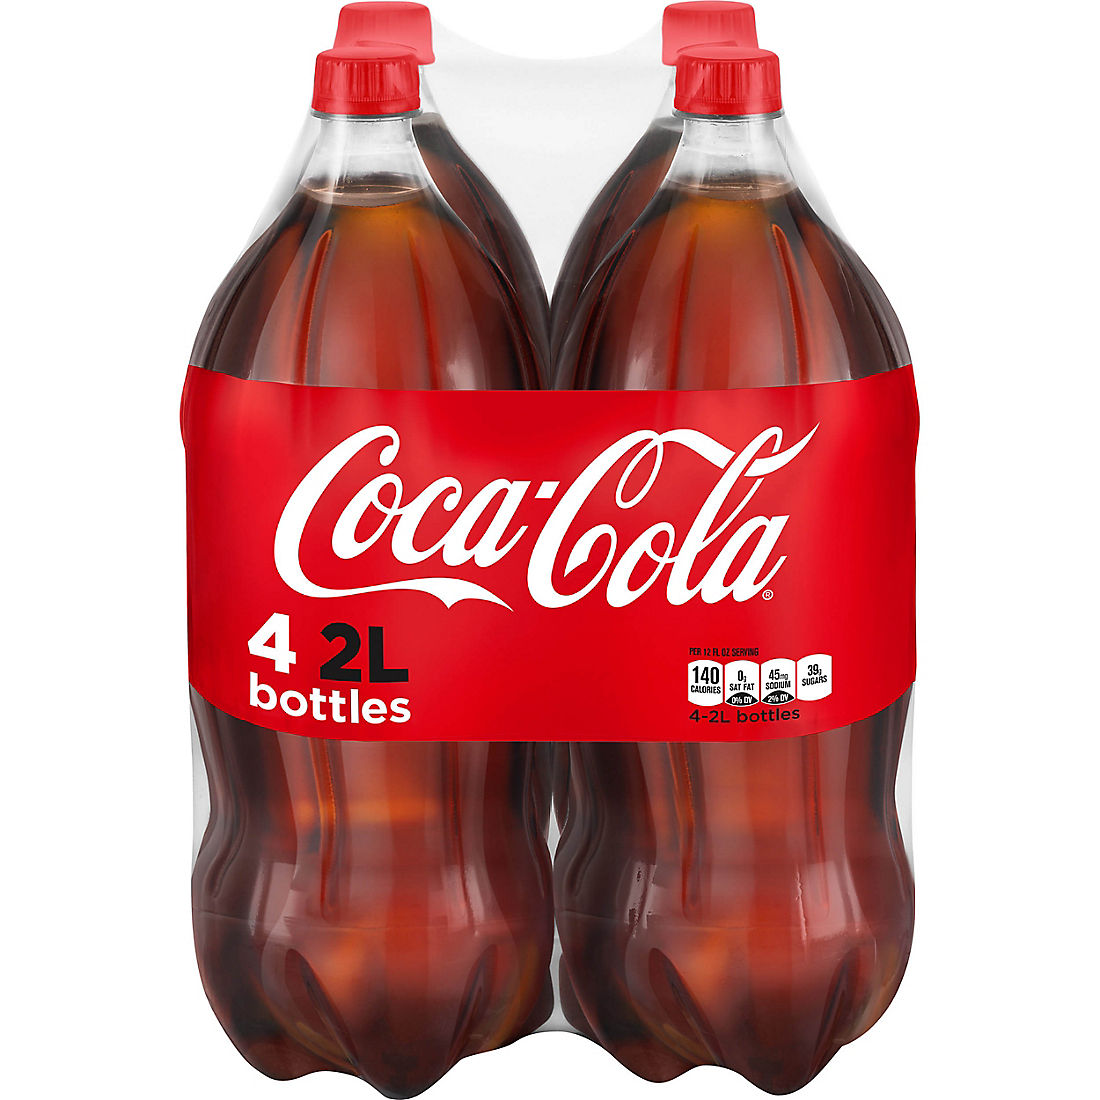 COCA COLA COKE Sign Shop Refreshed Coca Cola in bottles Plastic 8 1/2" X 12" 